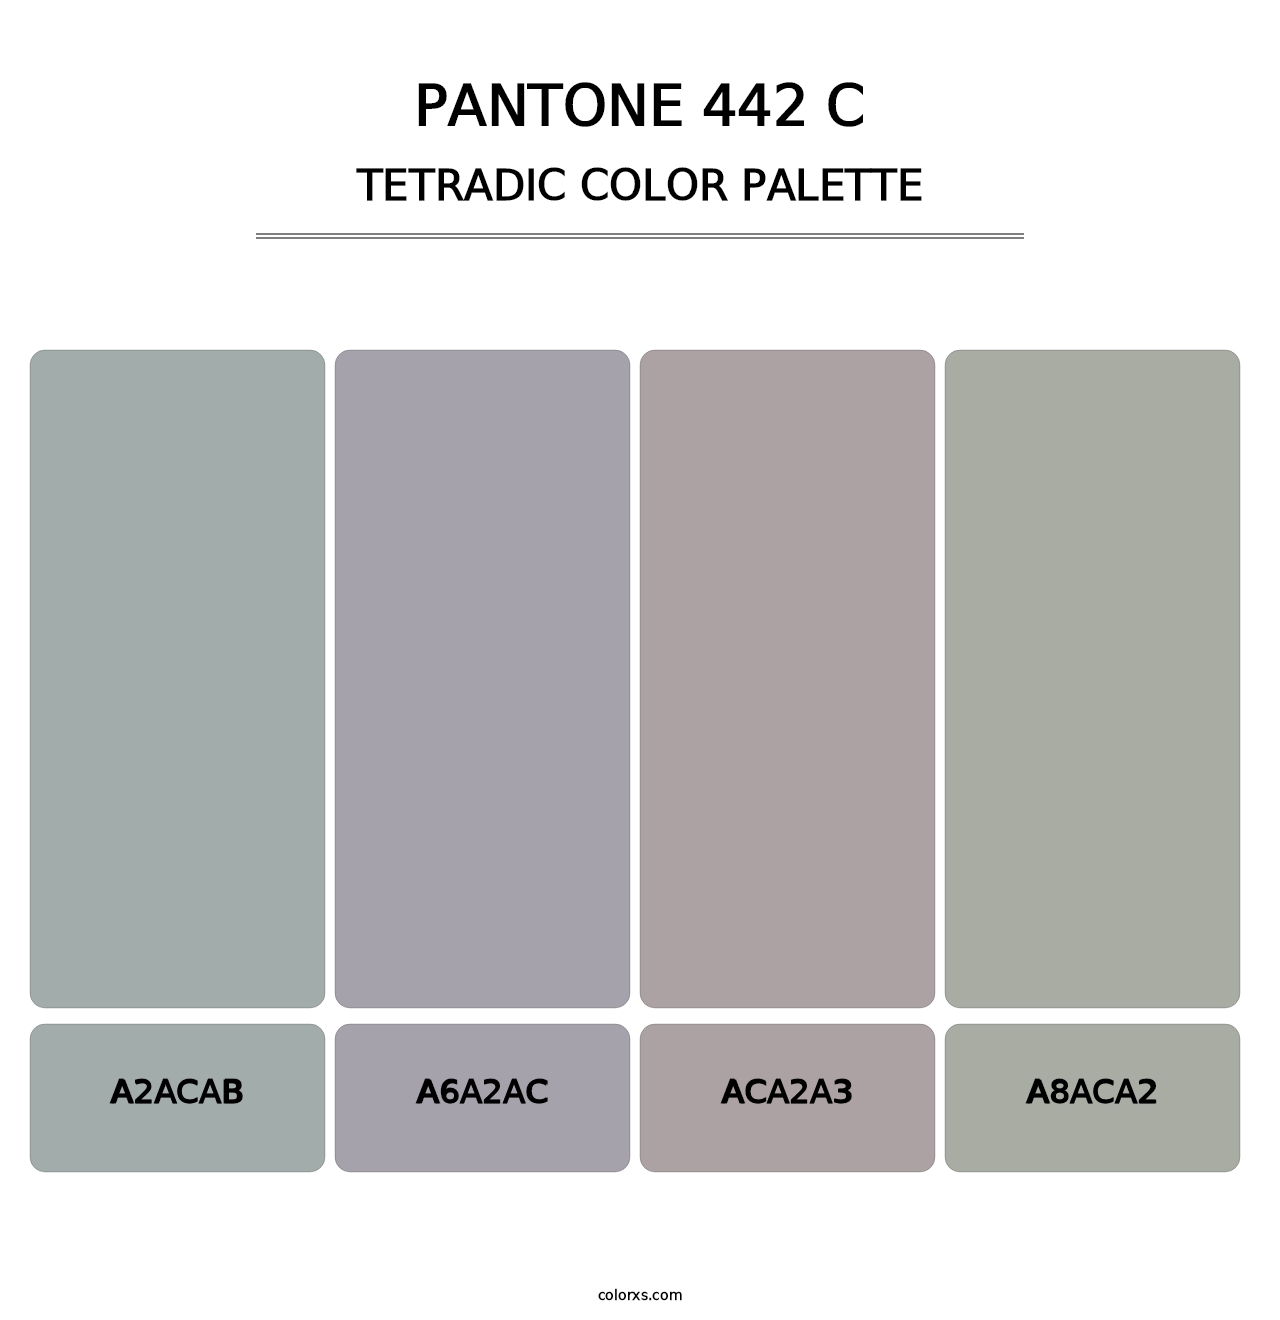 PANTONE 442 C - Tetradic Color Palette